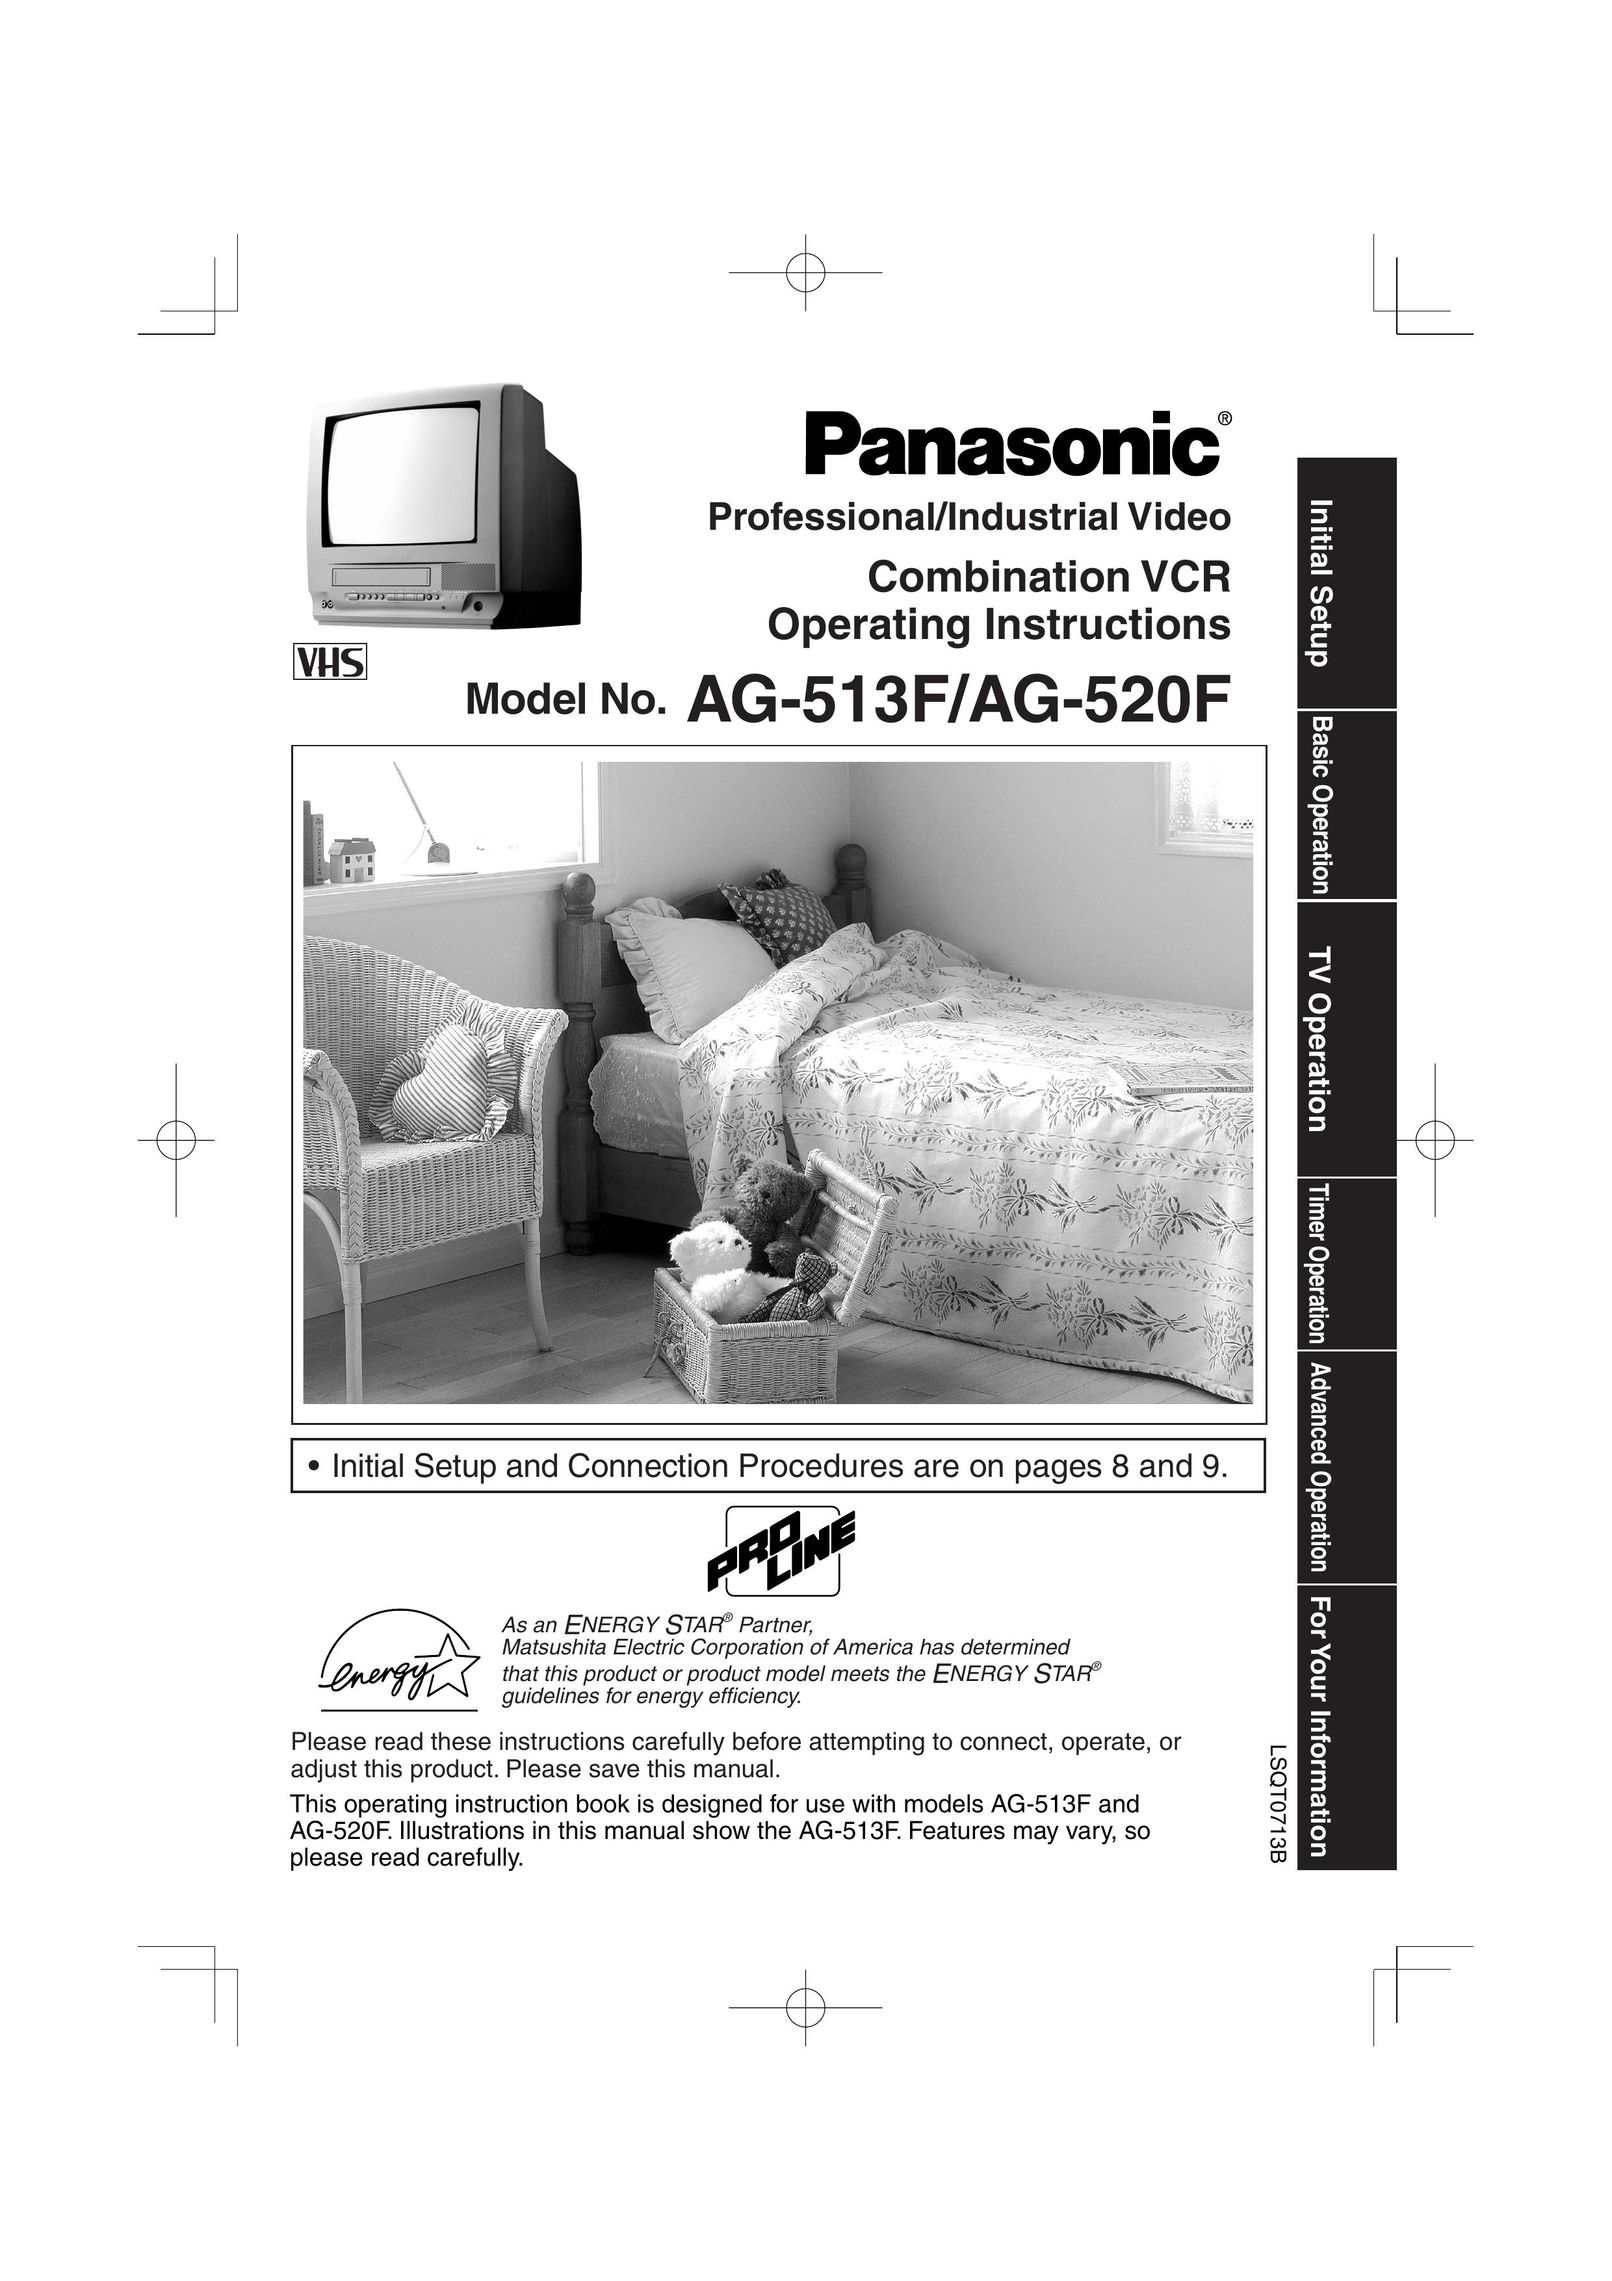 Panasonic AG-520F TV VCR Combo User Manual